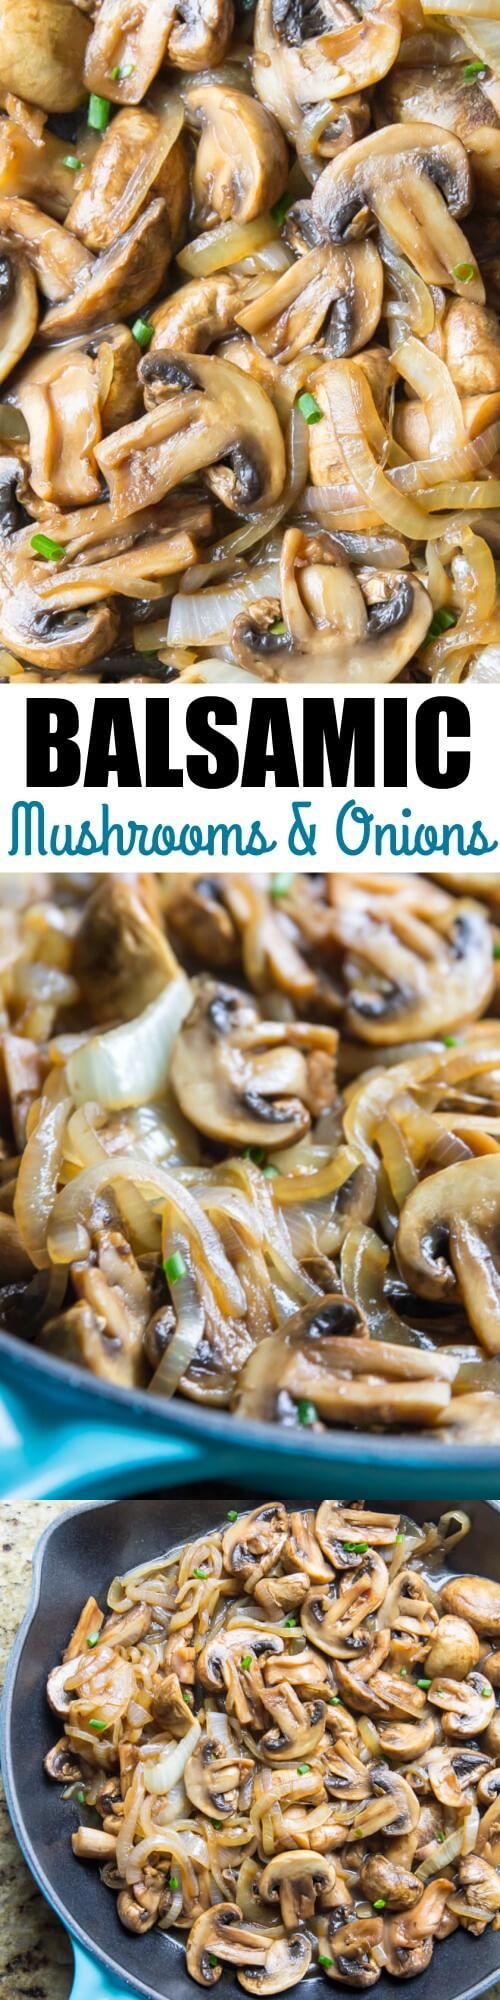 Balsamic Mushrooms and Onions